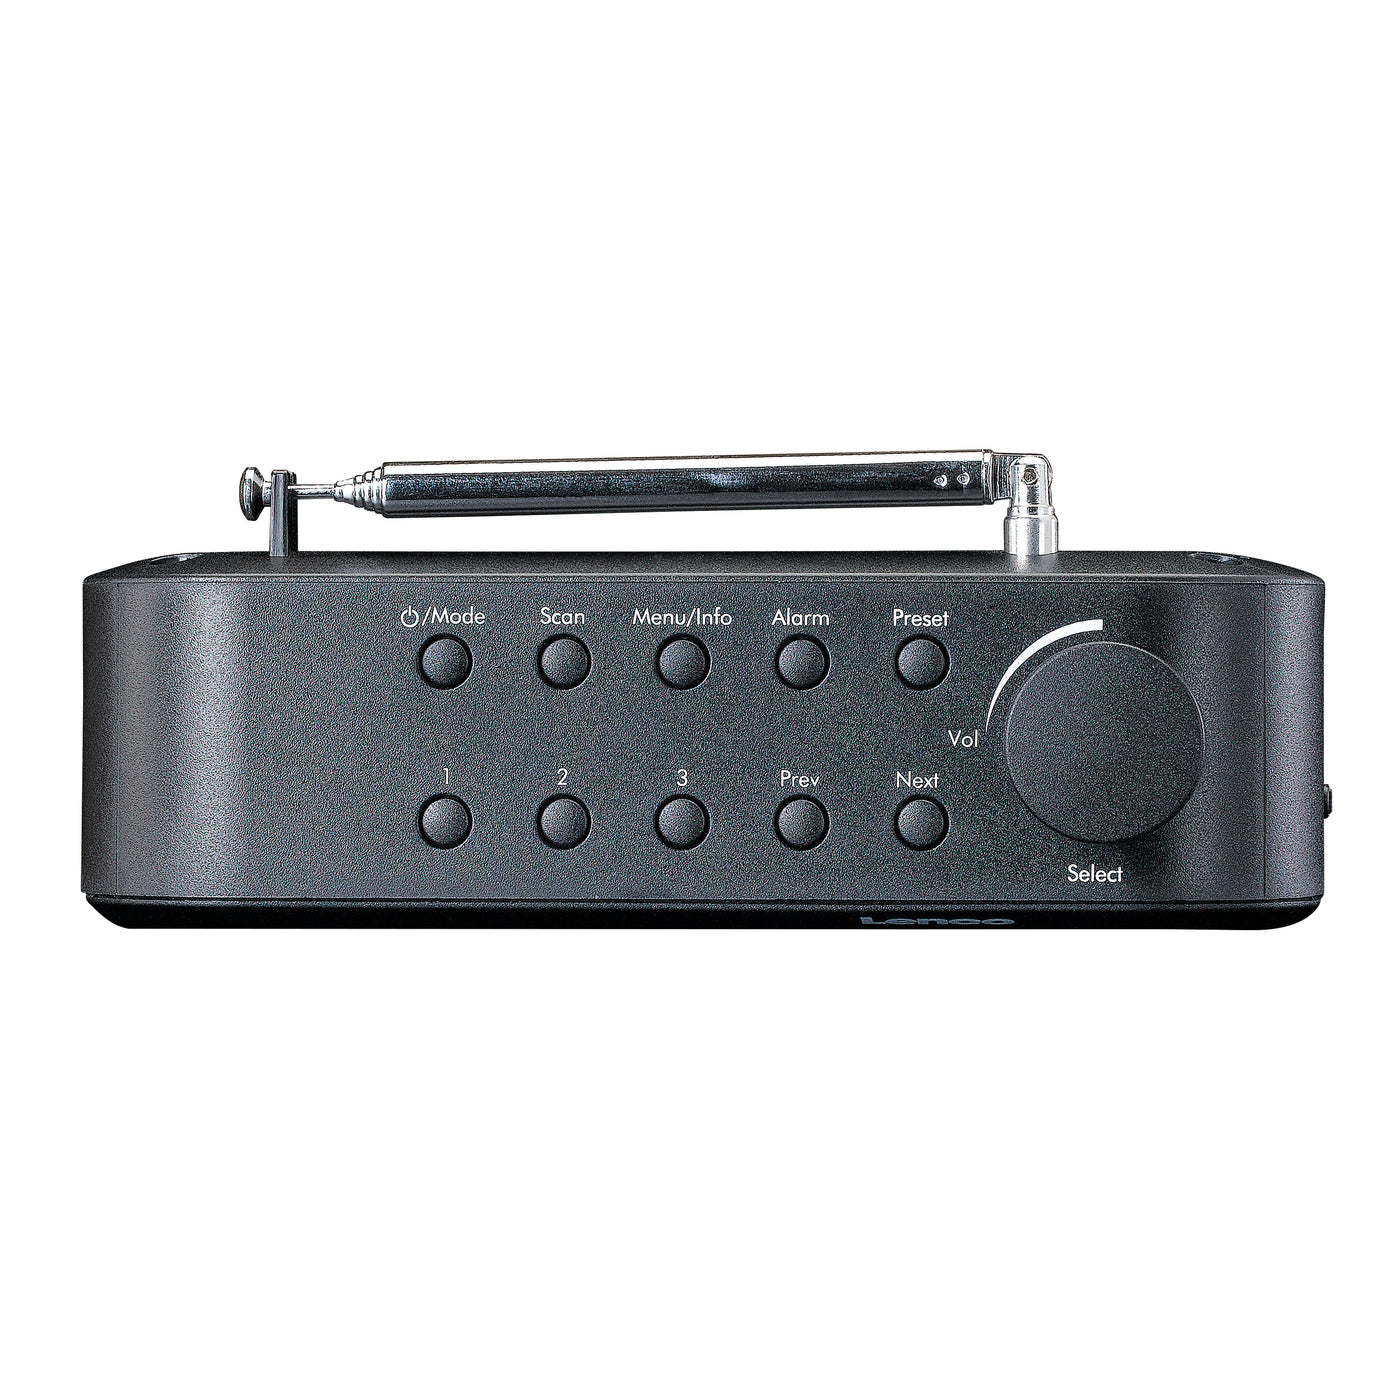 LENCO PDR-026BK - Portable DAB+/FM radio with Bluetooth® - Black – Lenco -Catalog | Digitalradios (DAB+)